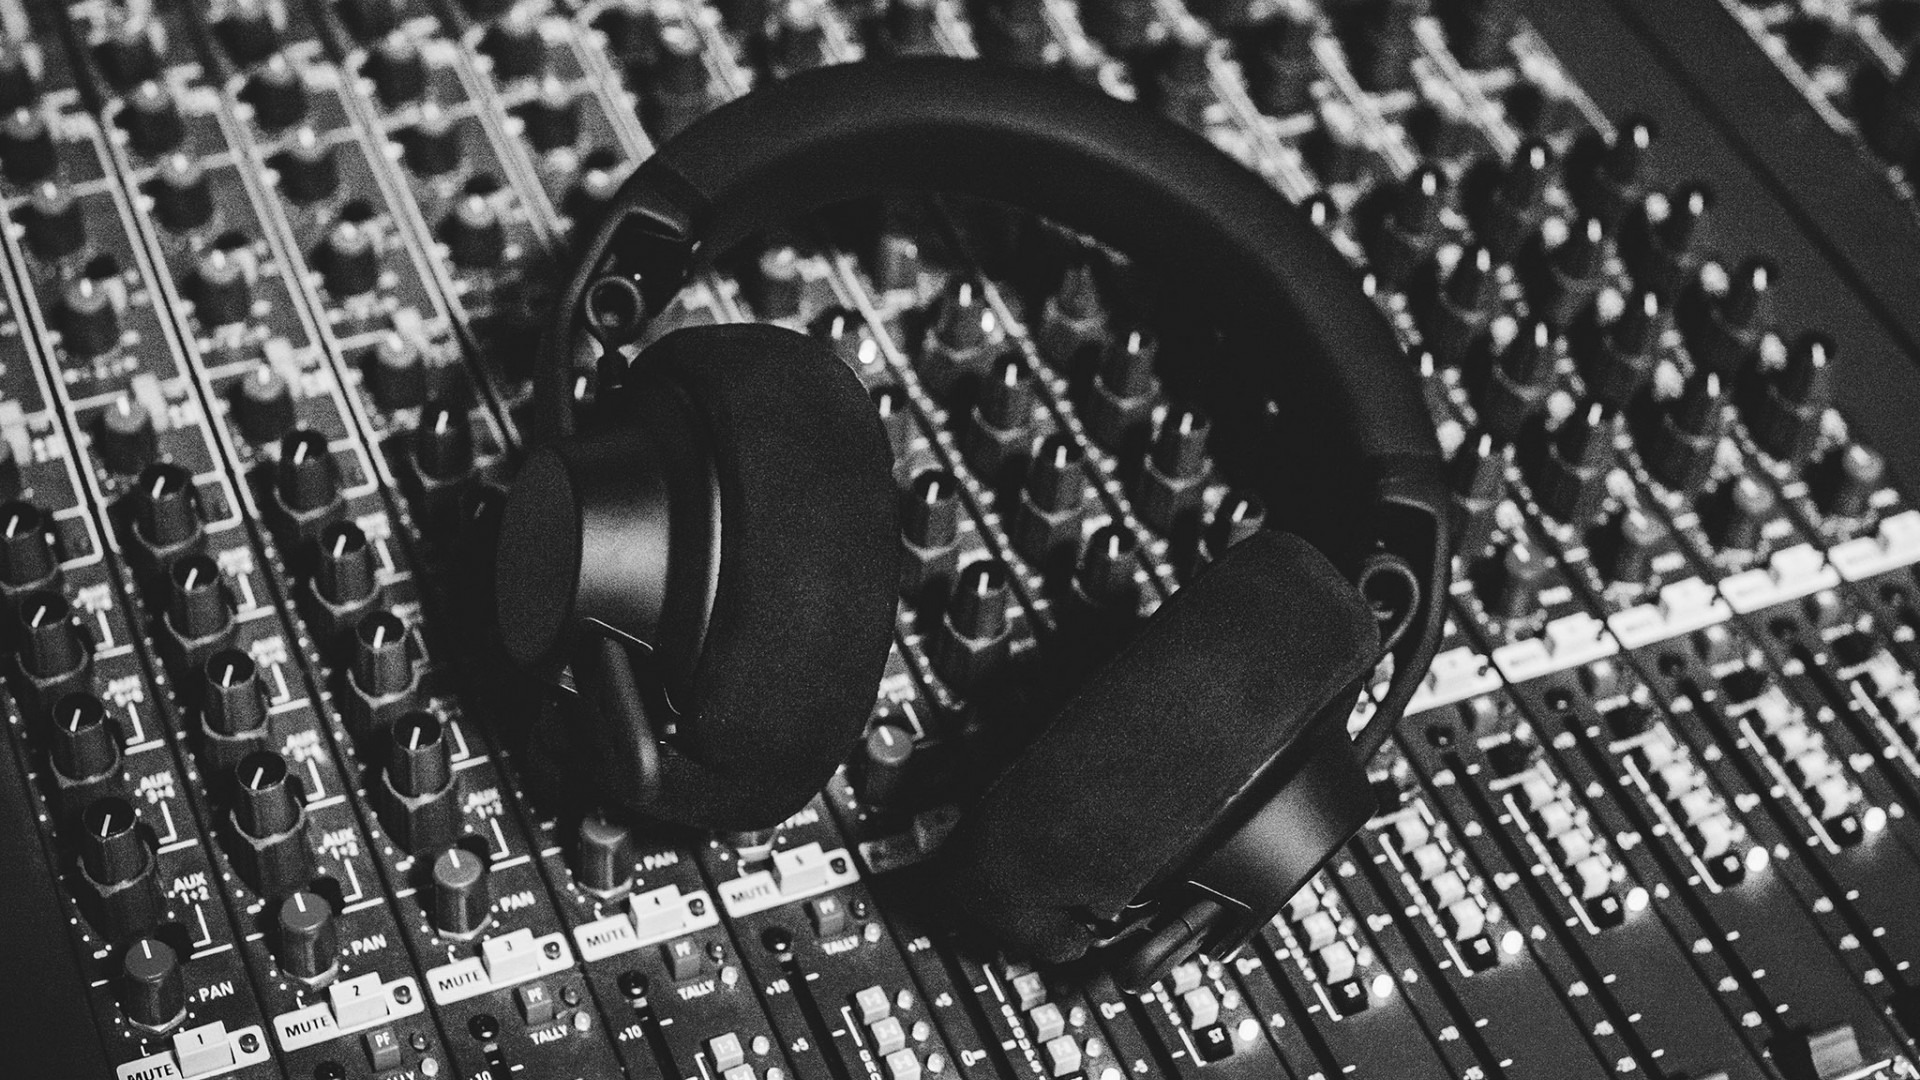 Richie Hawtin and AIAIAI collab on wireless lossless studio headphones